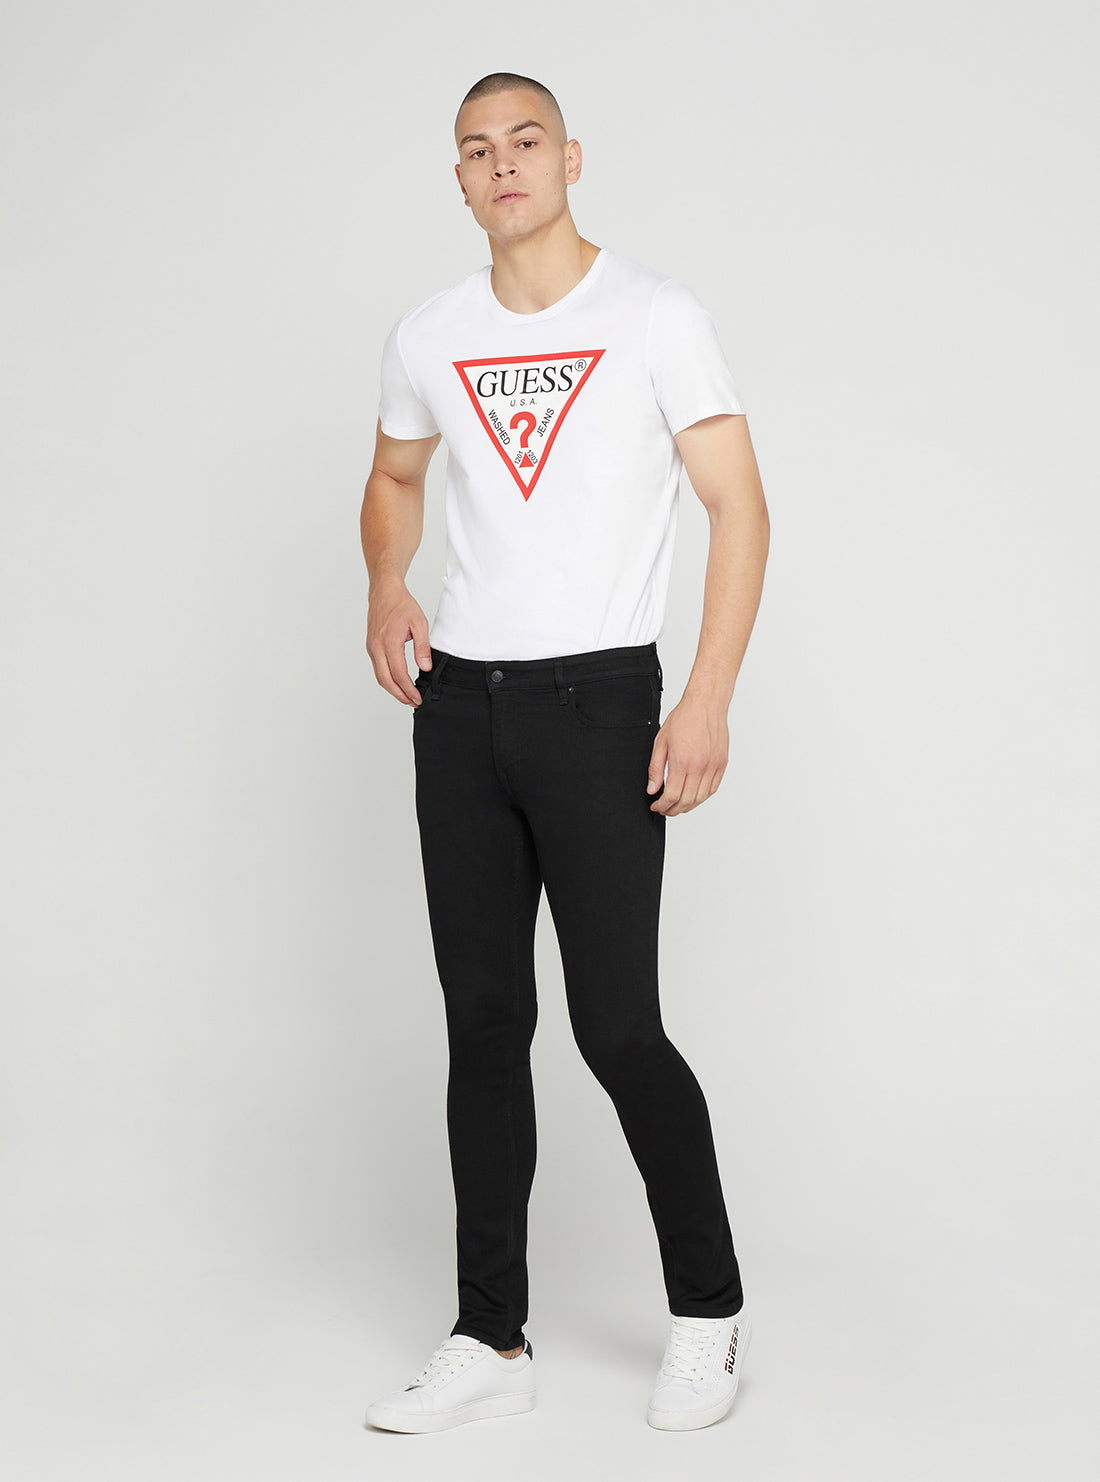 GUESS Men's Eco Low-Rise Skinny Miami Denim Jeans in Carry Black Wash M2YAN1D4Q51 Full View